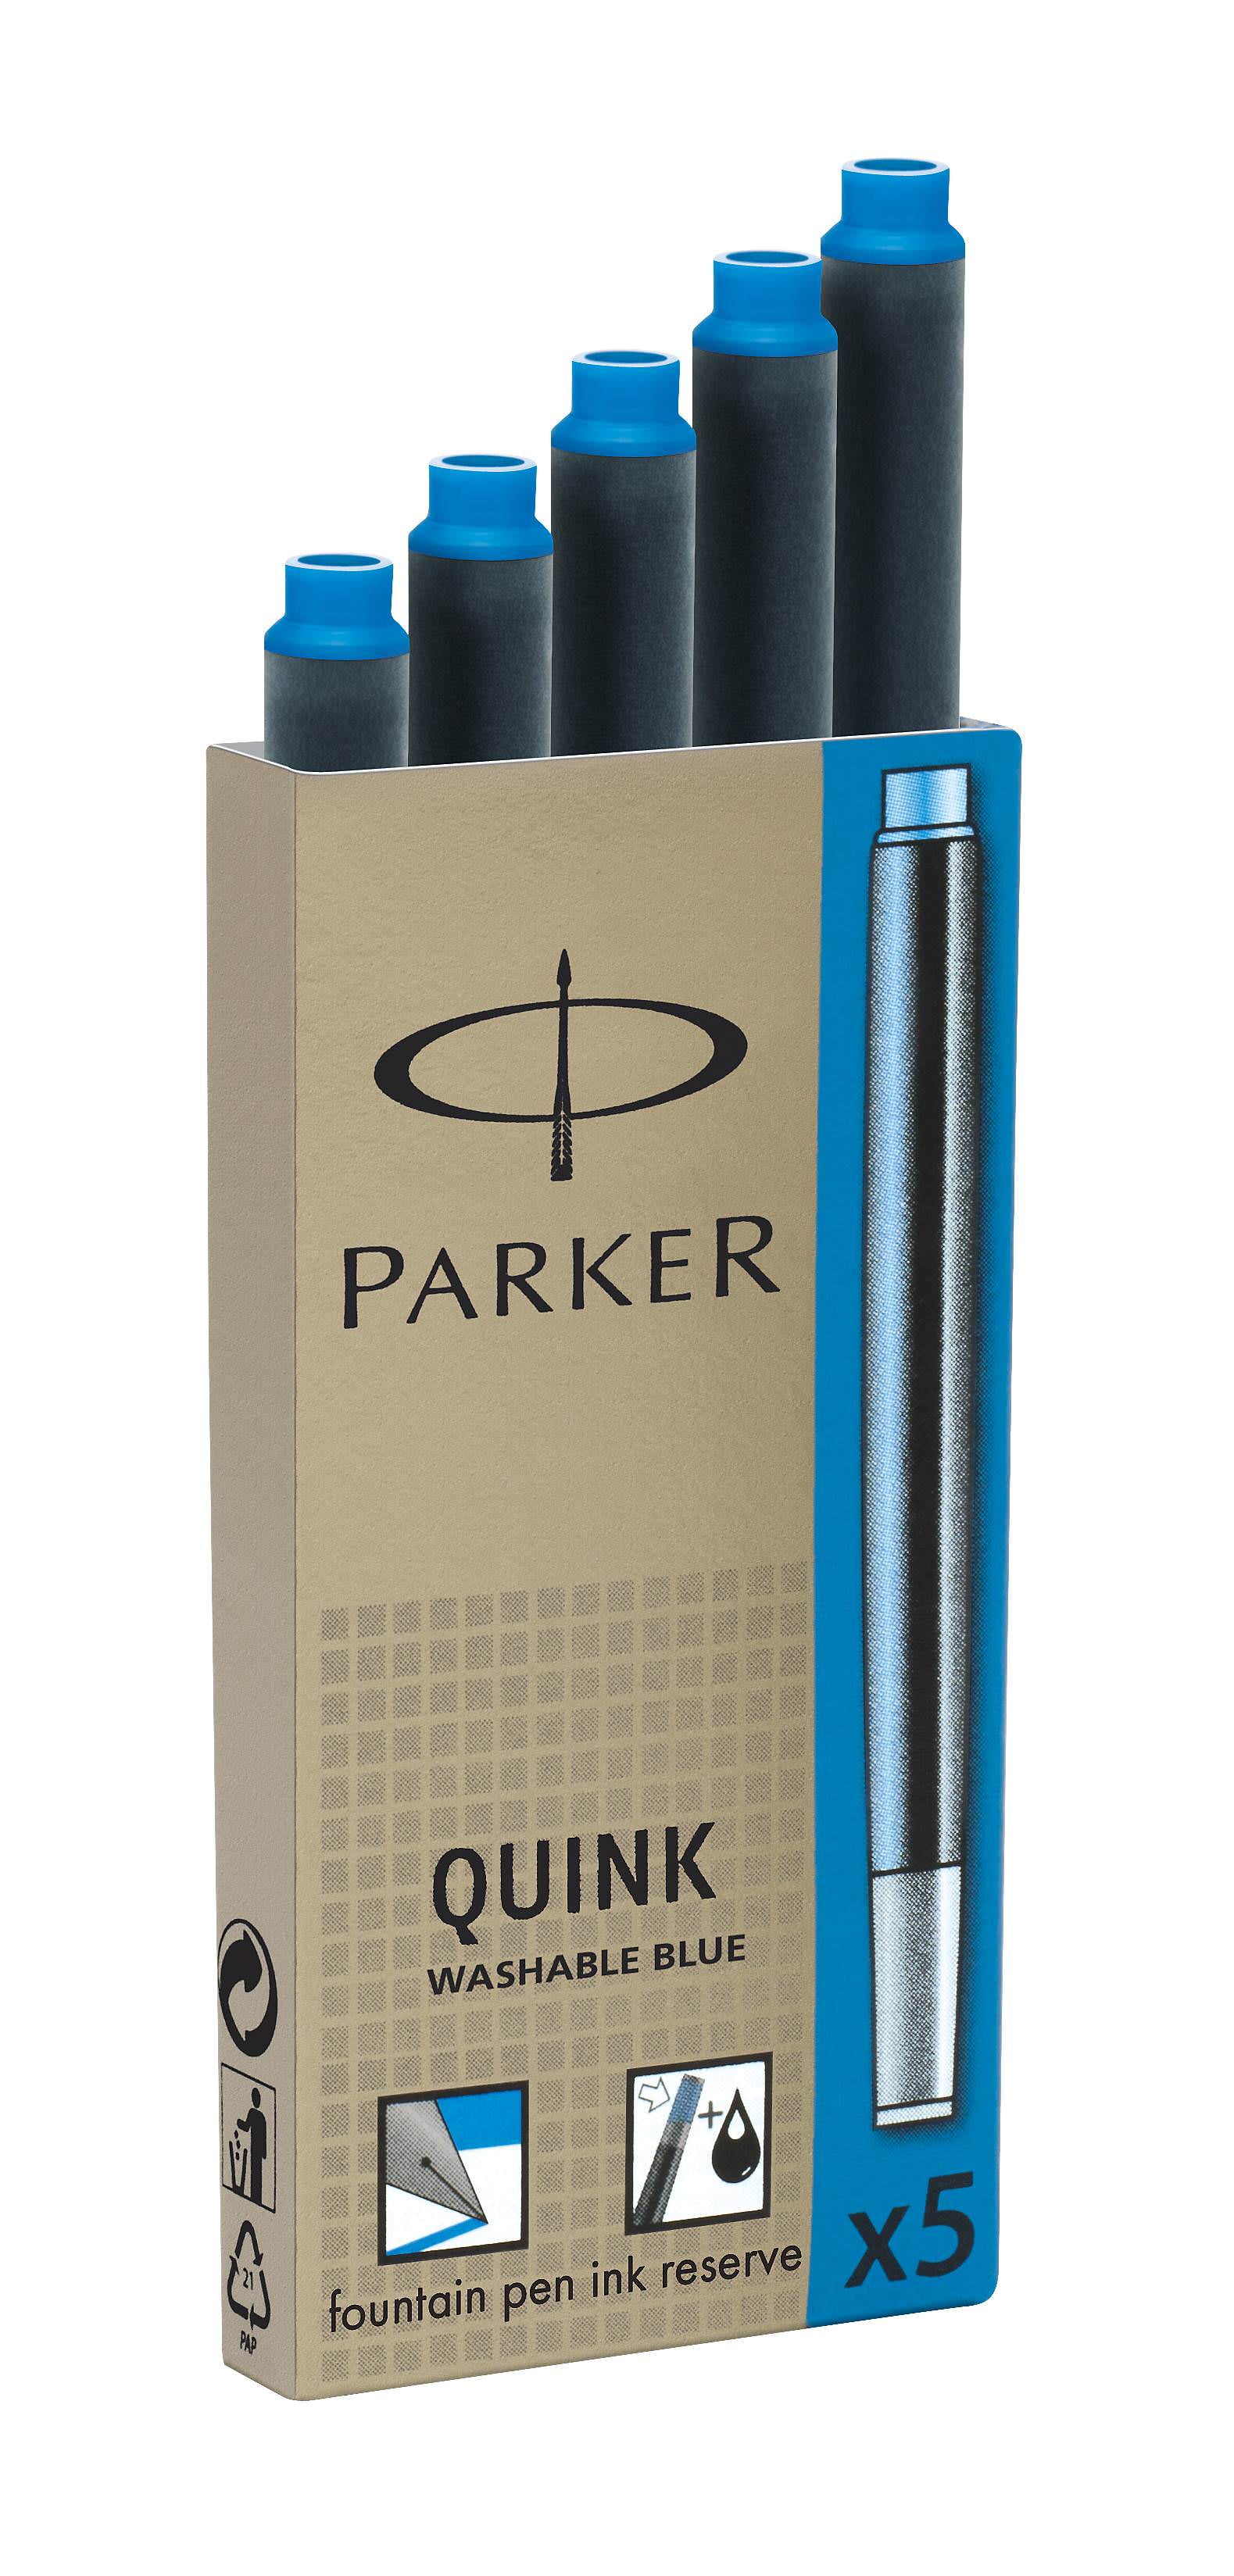 PARKER QUINK Long Fountain Pen Ink Refill Cartridges, Blue, 5